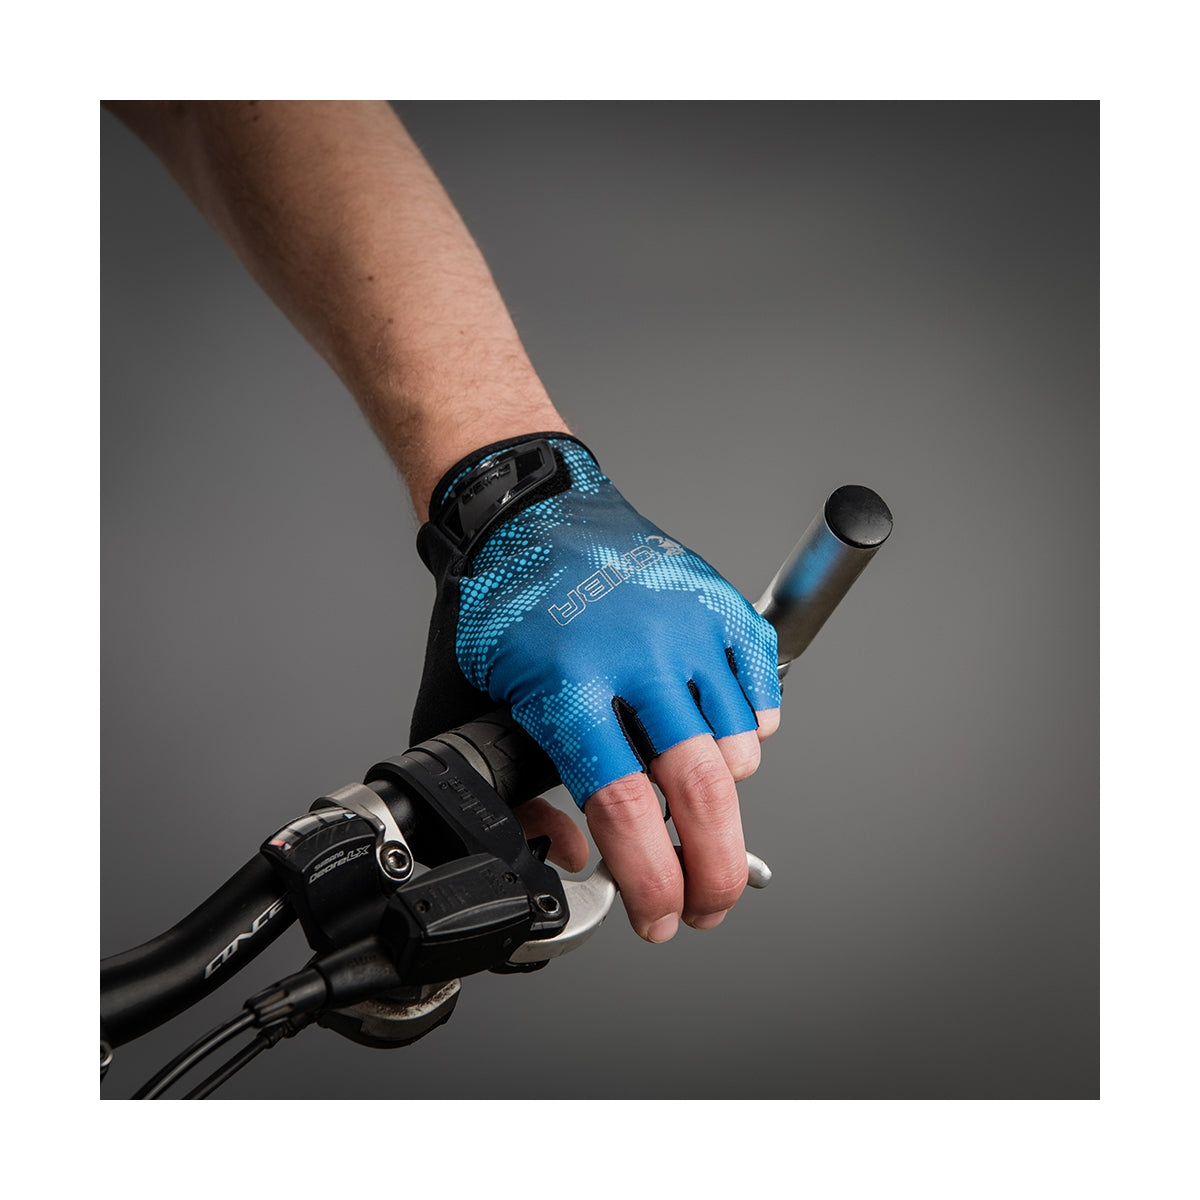 Chiba Ride II Mens Cycling Gloves (Blue)